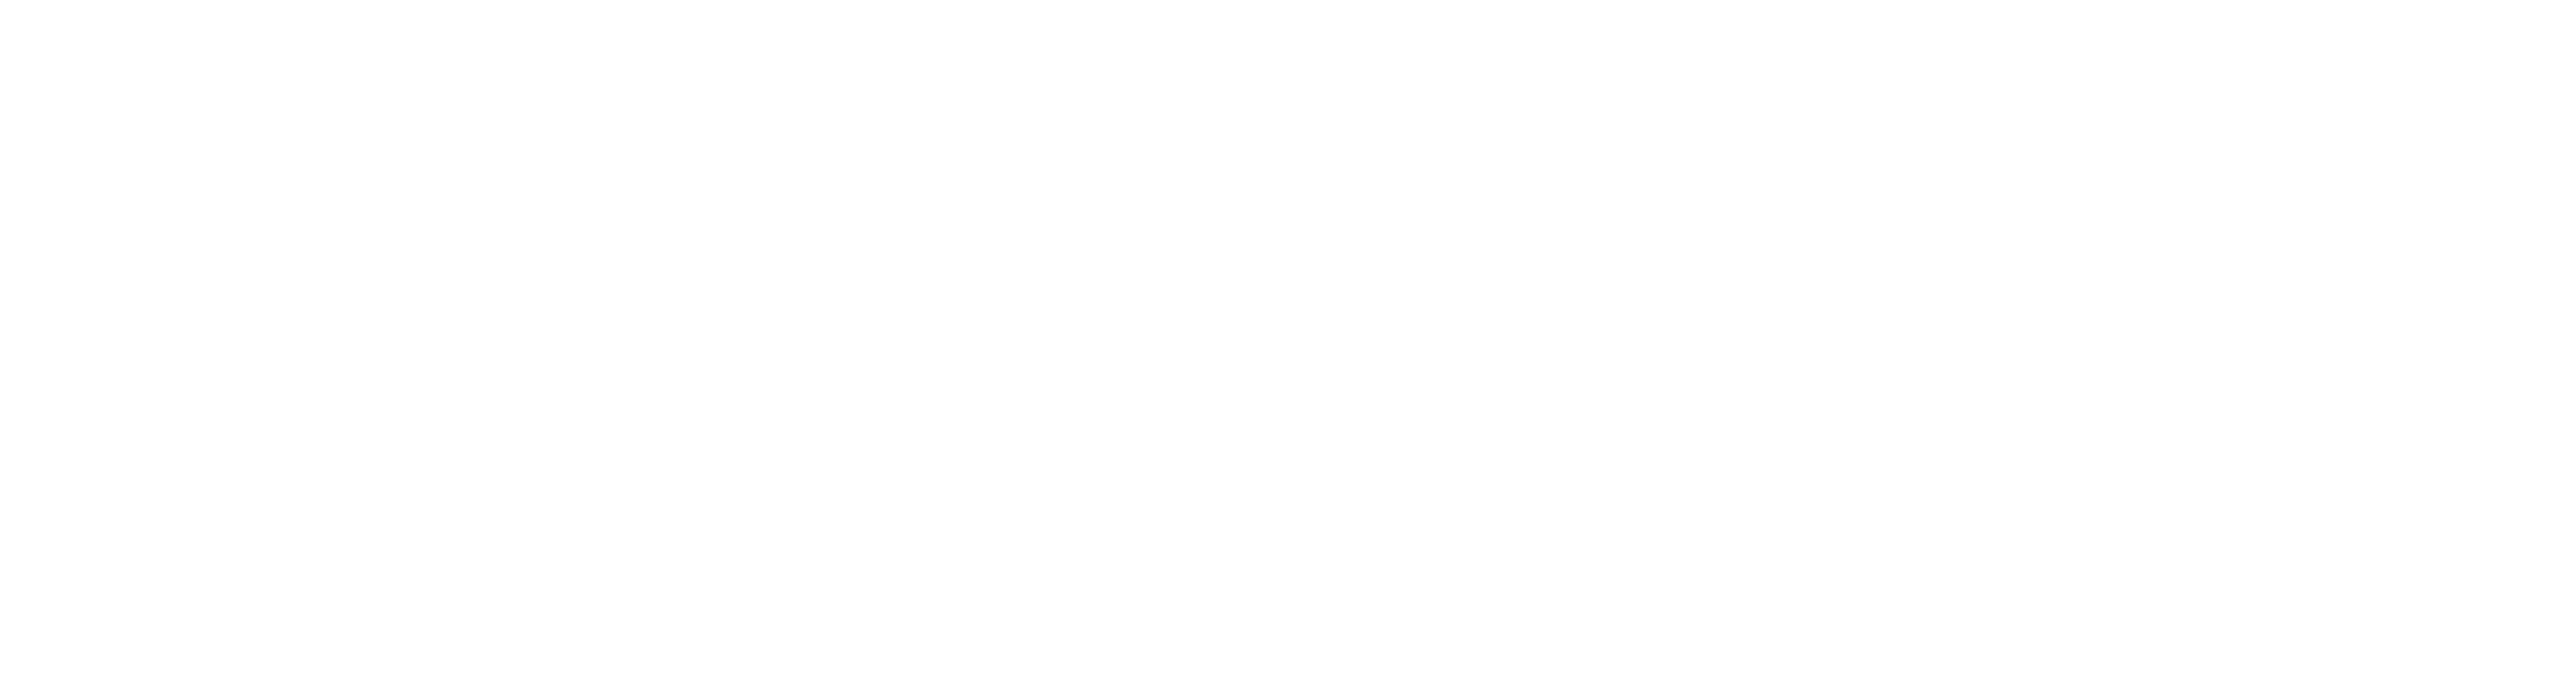 BY LOTT - Body & Lifestyle